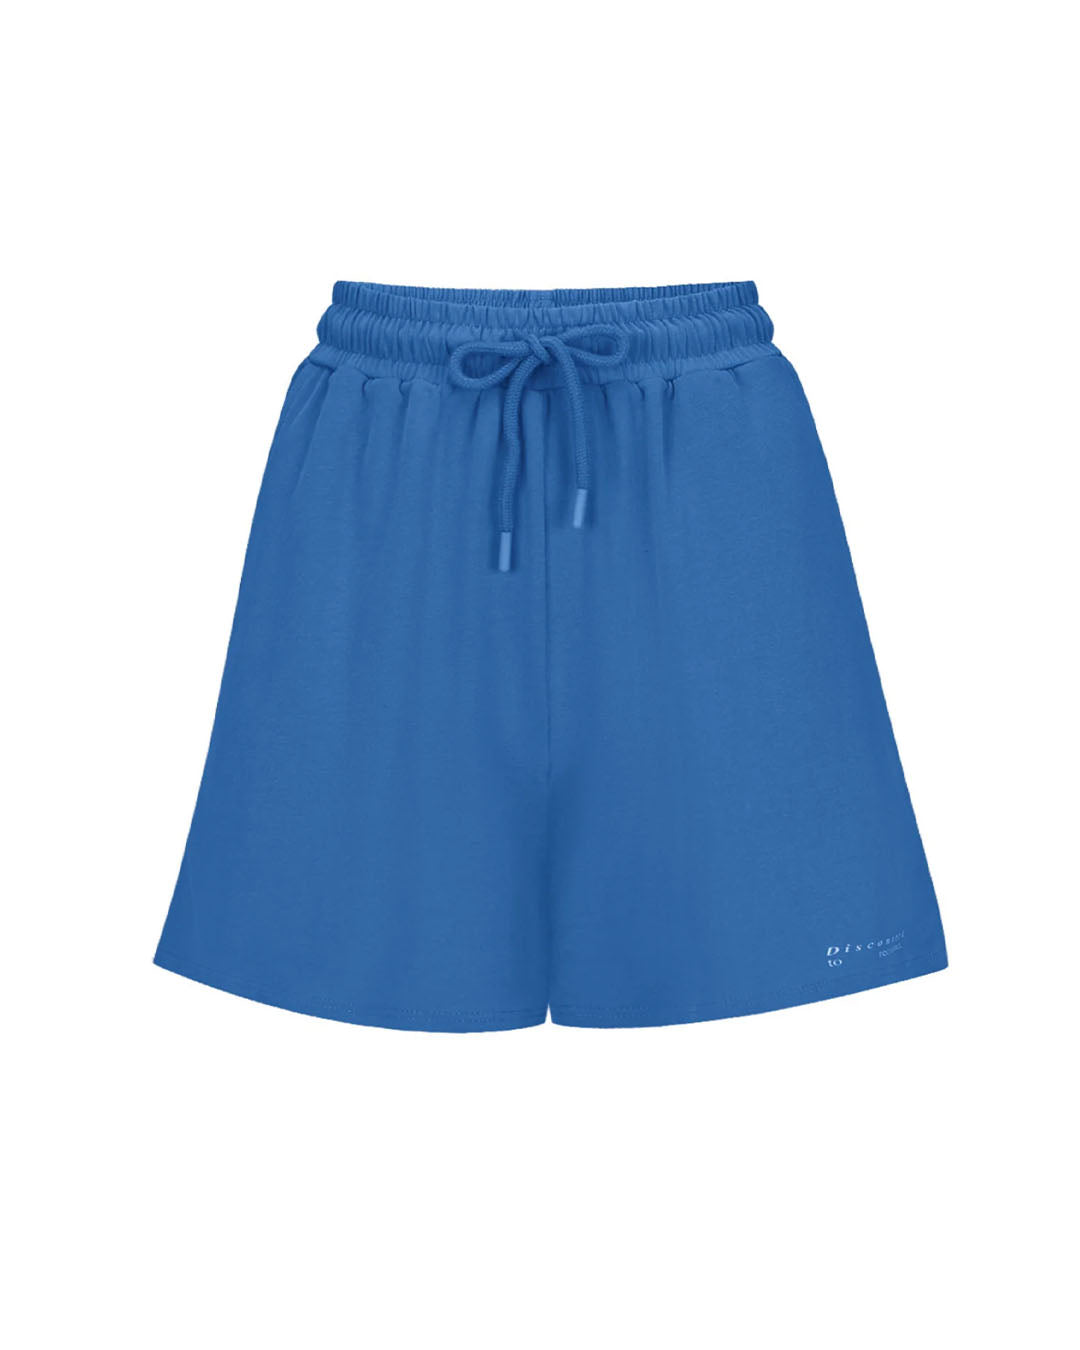 Cotton Sport Short - Ocean Activewear by Pinky & Kamal - Prae Store